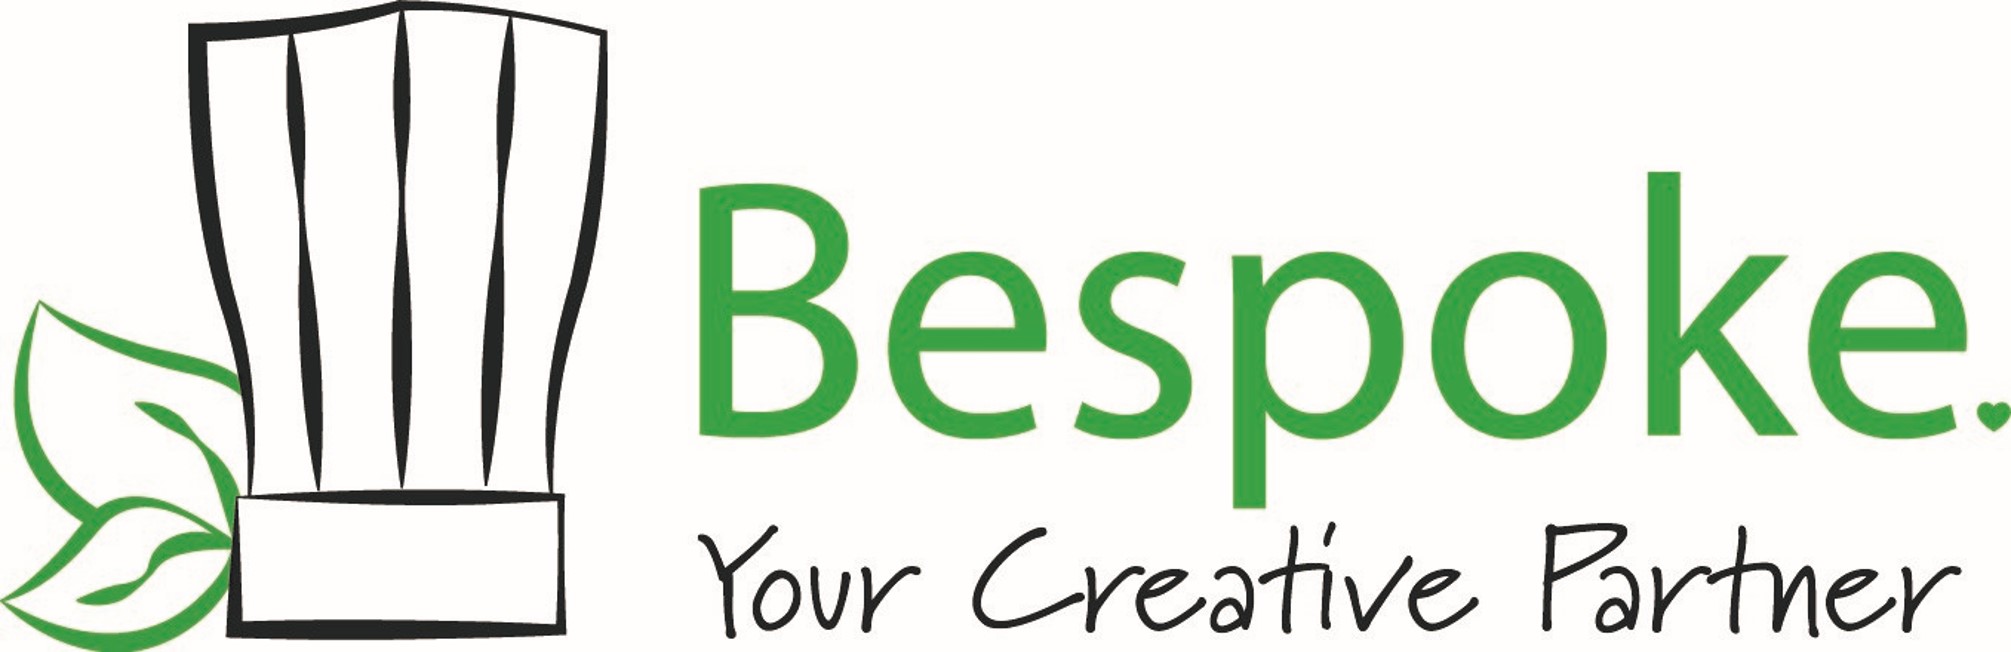 Bespoke Kitchen Foods Logo